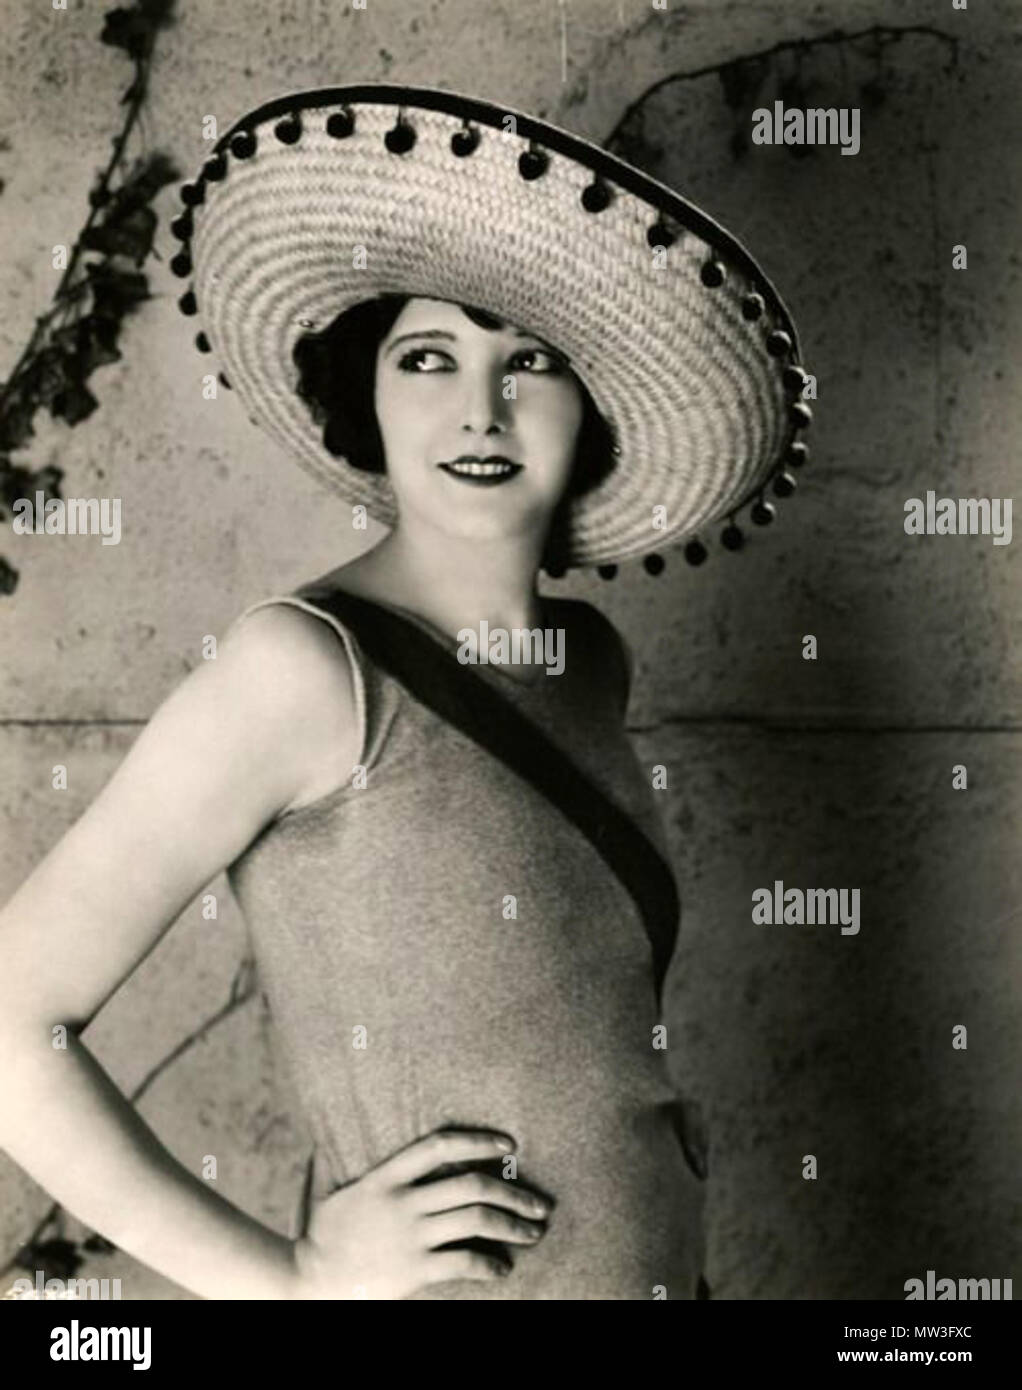 . Español: Fotografía Thelma Parr tomada por Mack Sennett (1920s) . 11 April 2012, 00:37:02. Mack Sennett Comedies 602 Thelma Parr2 Stock Photo